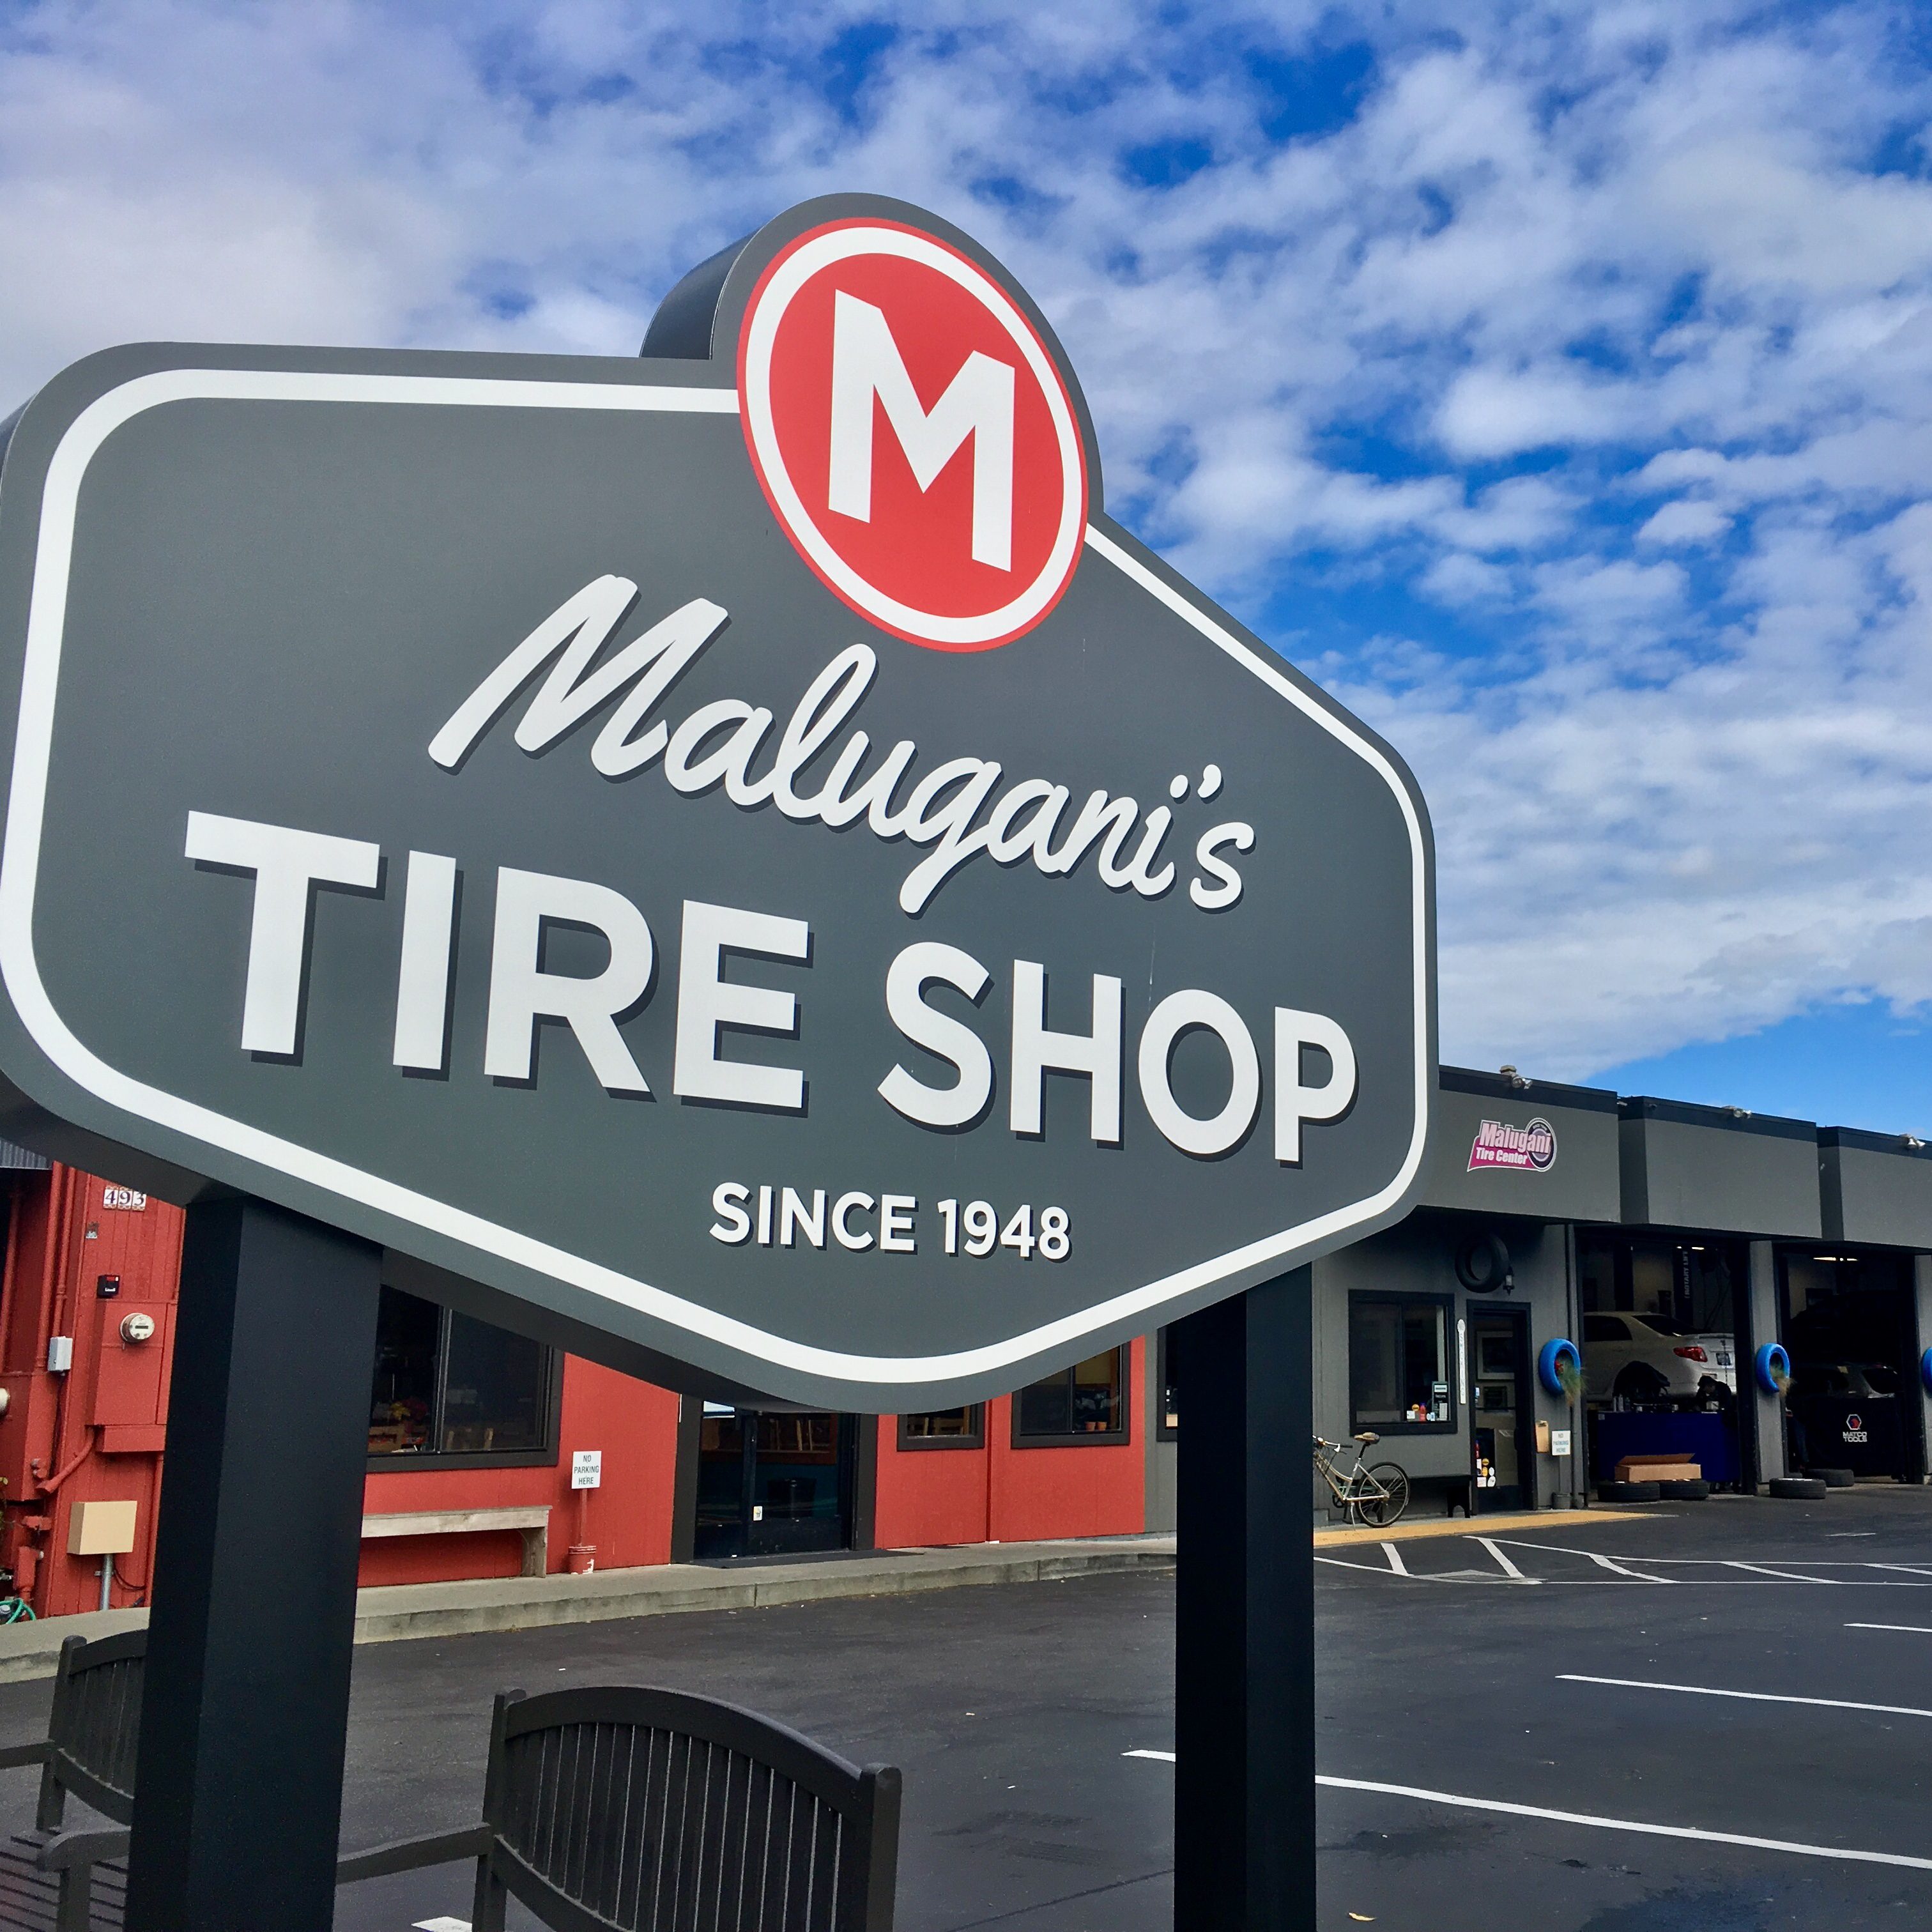 Malugani Tire Shop